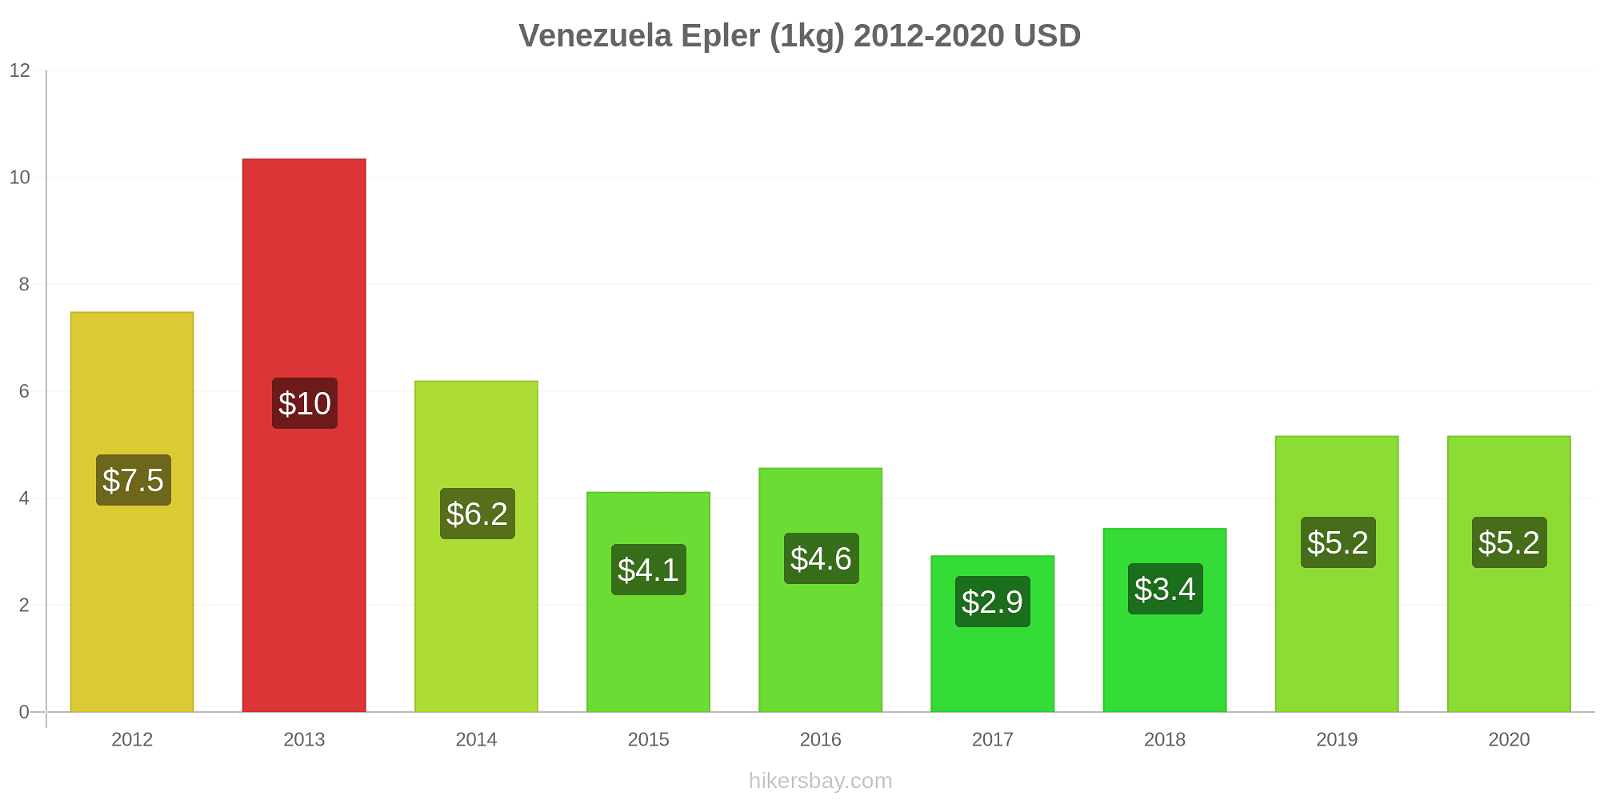 Venezuela prisendringer Epler (1kg) hikersbay.com